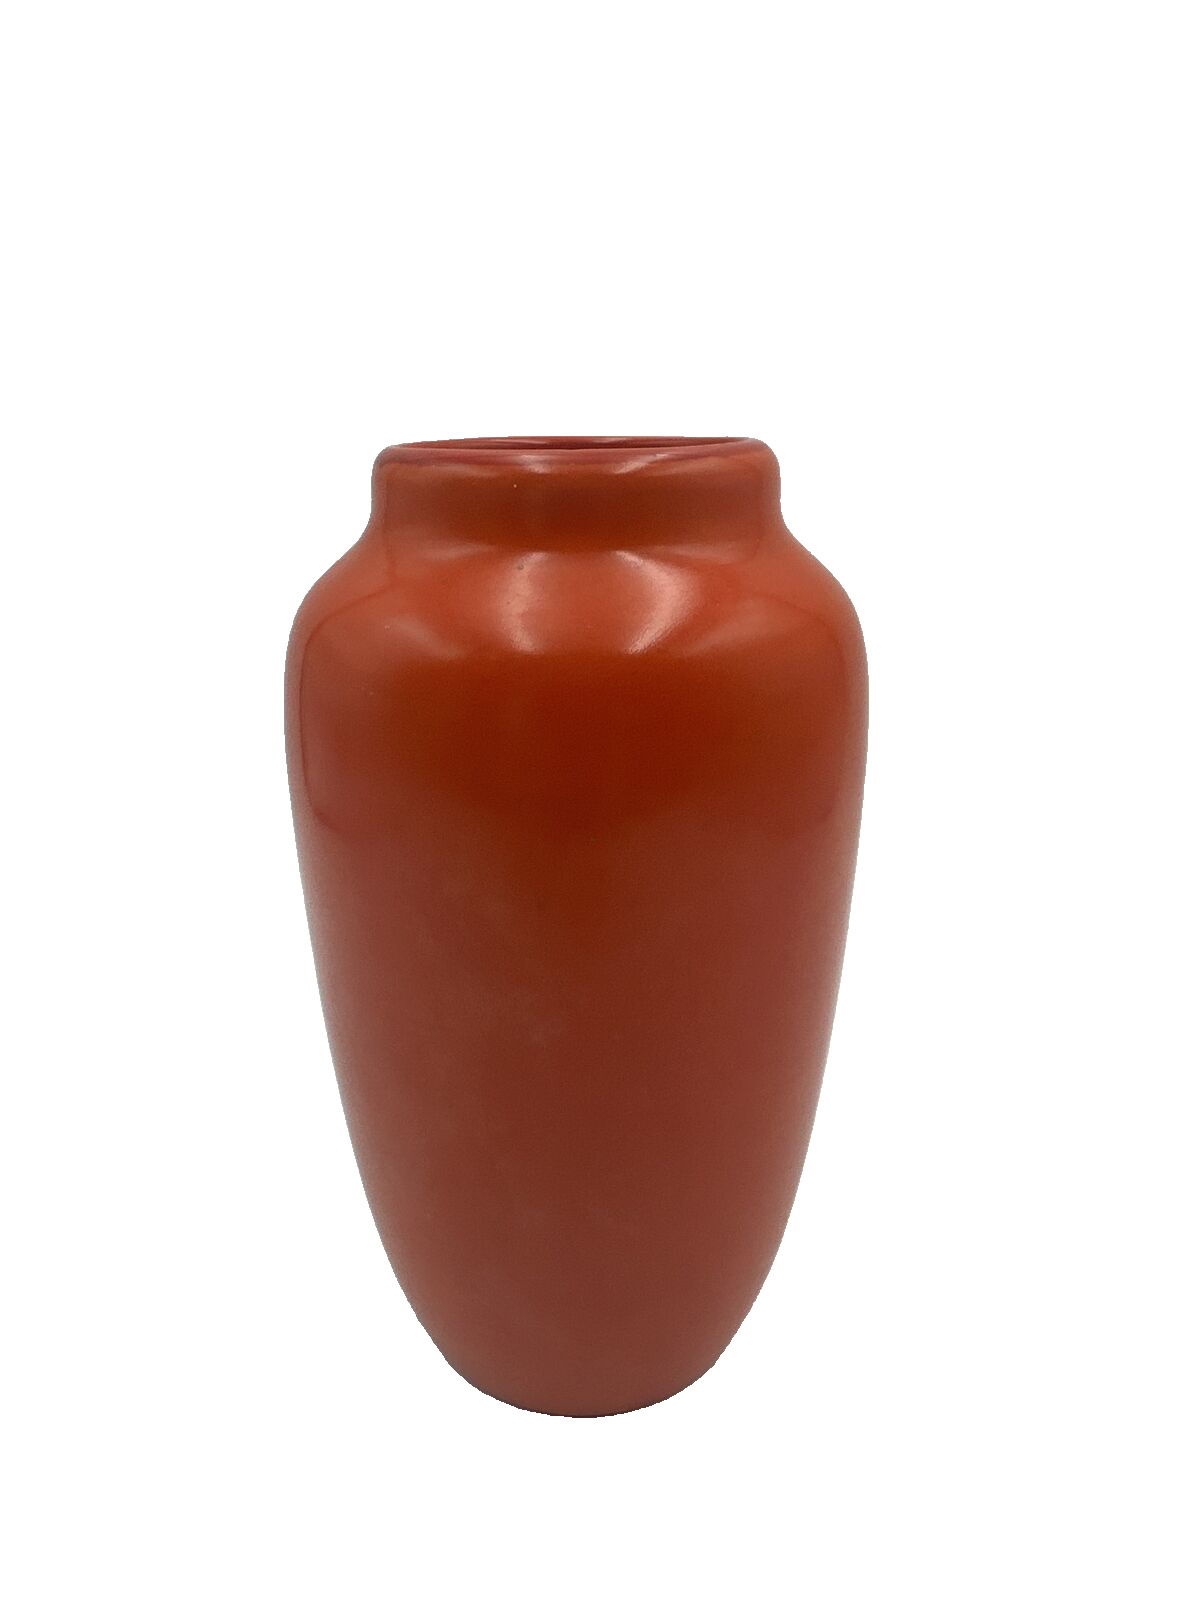 Weller Antique Vase Red Orange Chinese Chengtu Glaze Art Deco Pottery